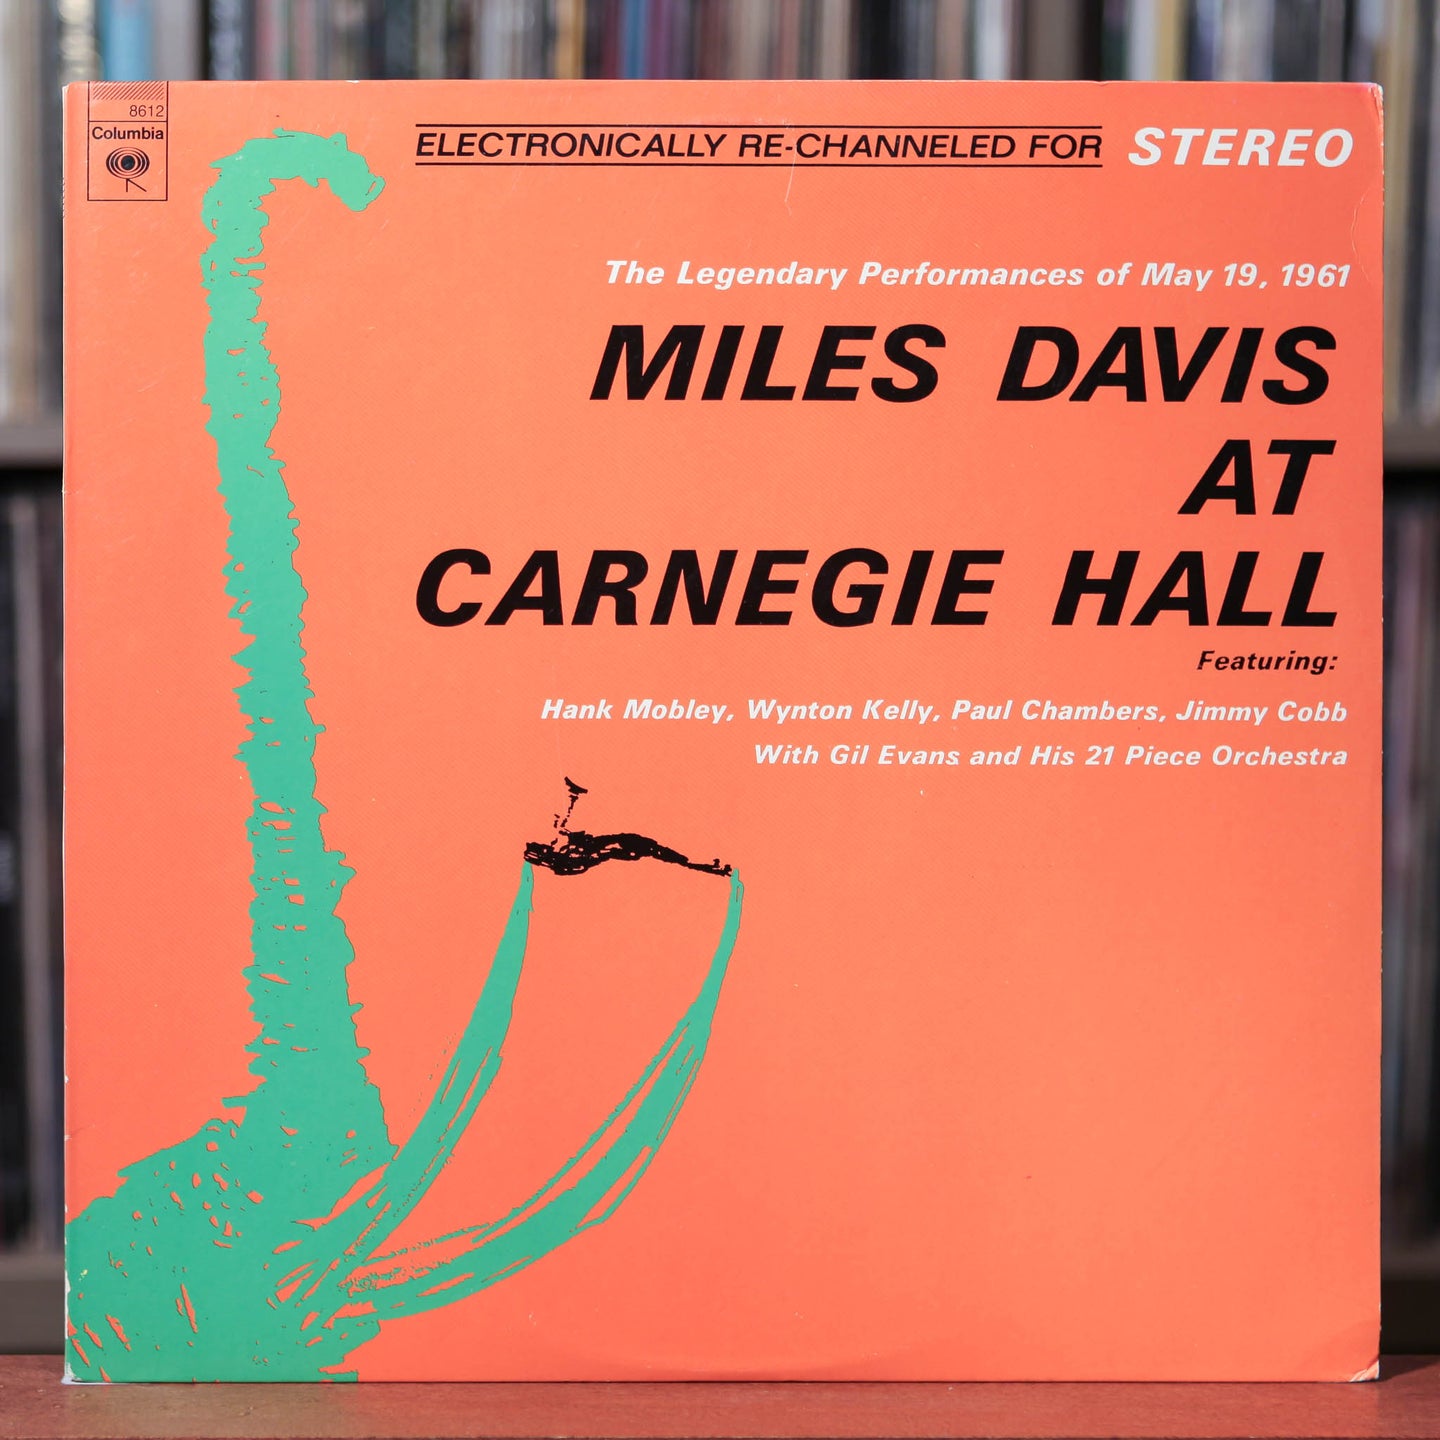 Miles Davis - Miles Davis At Carnegie Hall - 1990's Columbia, VG+/NM